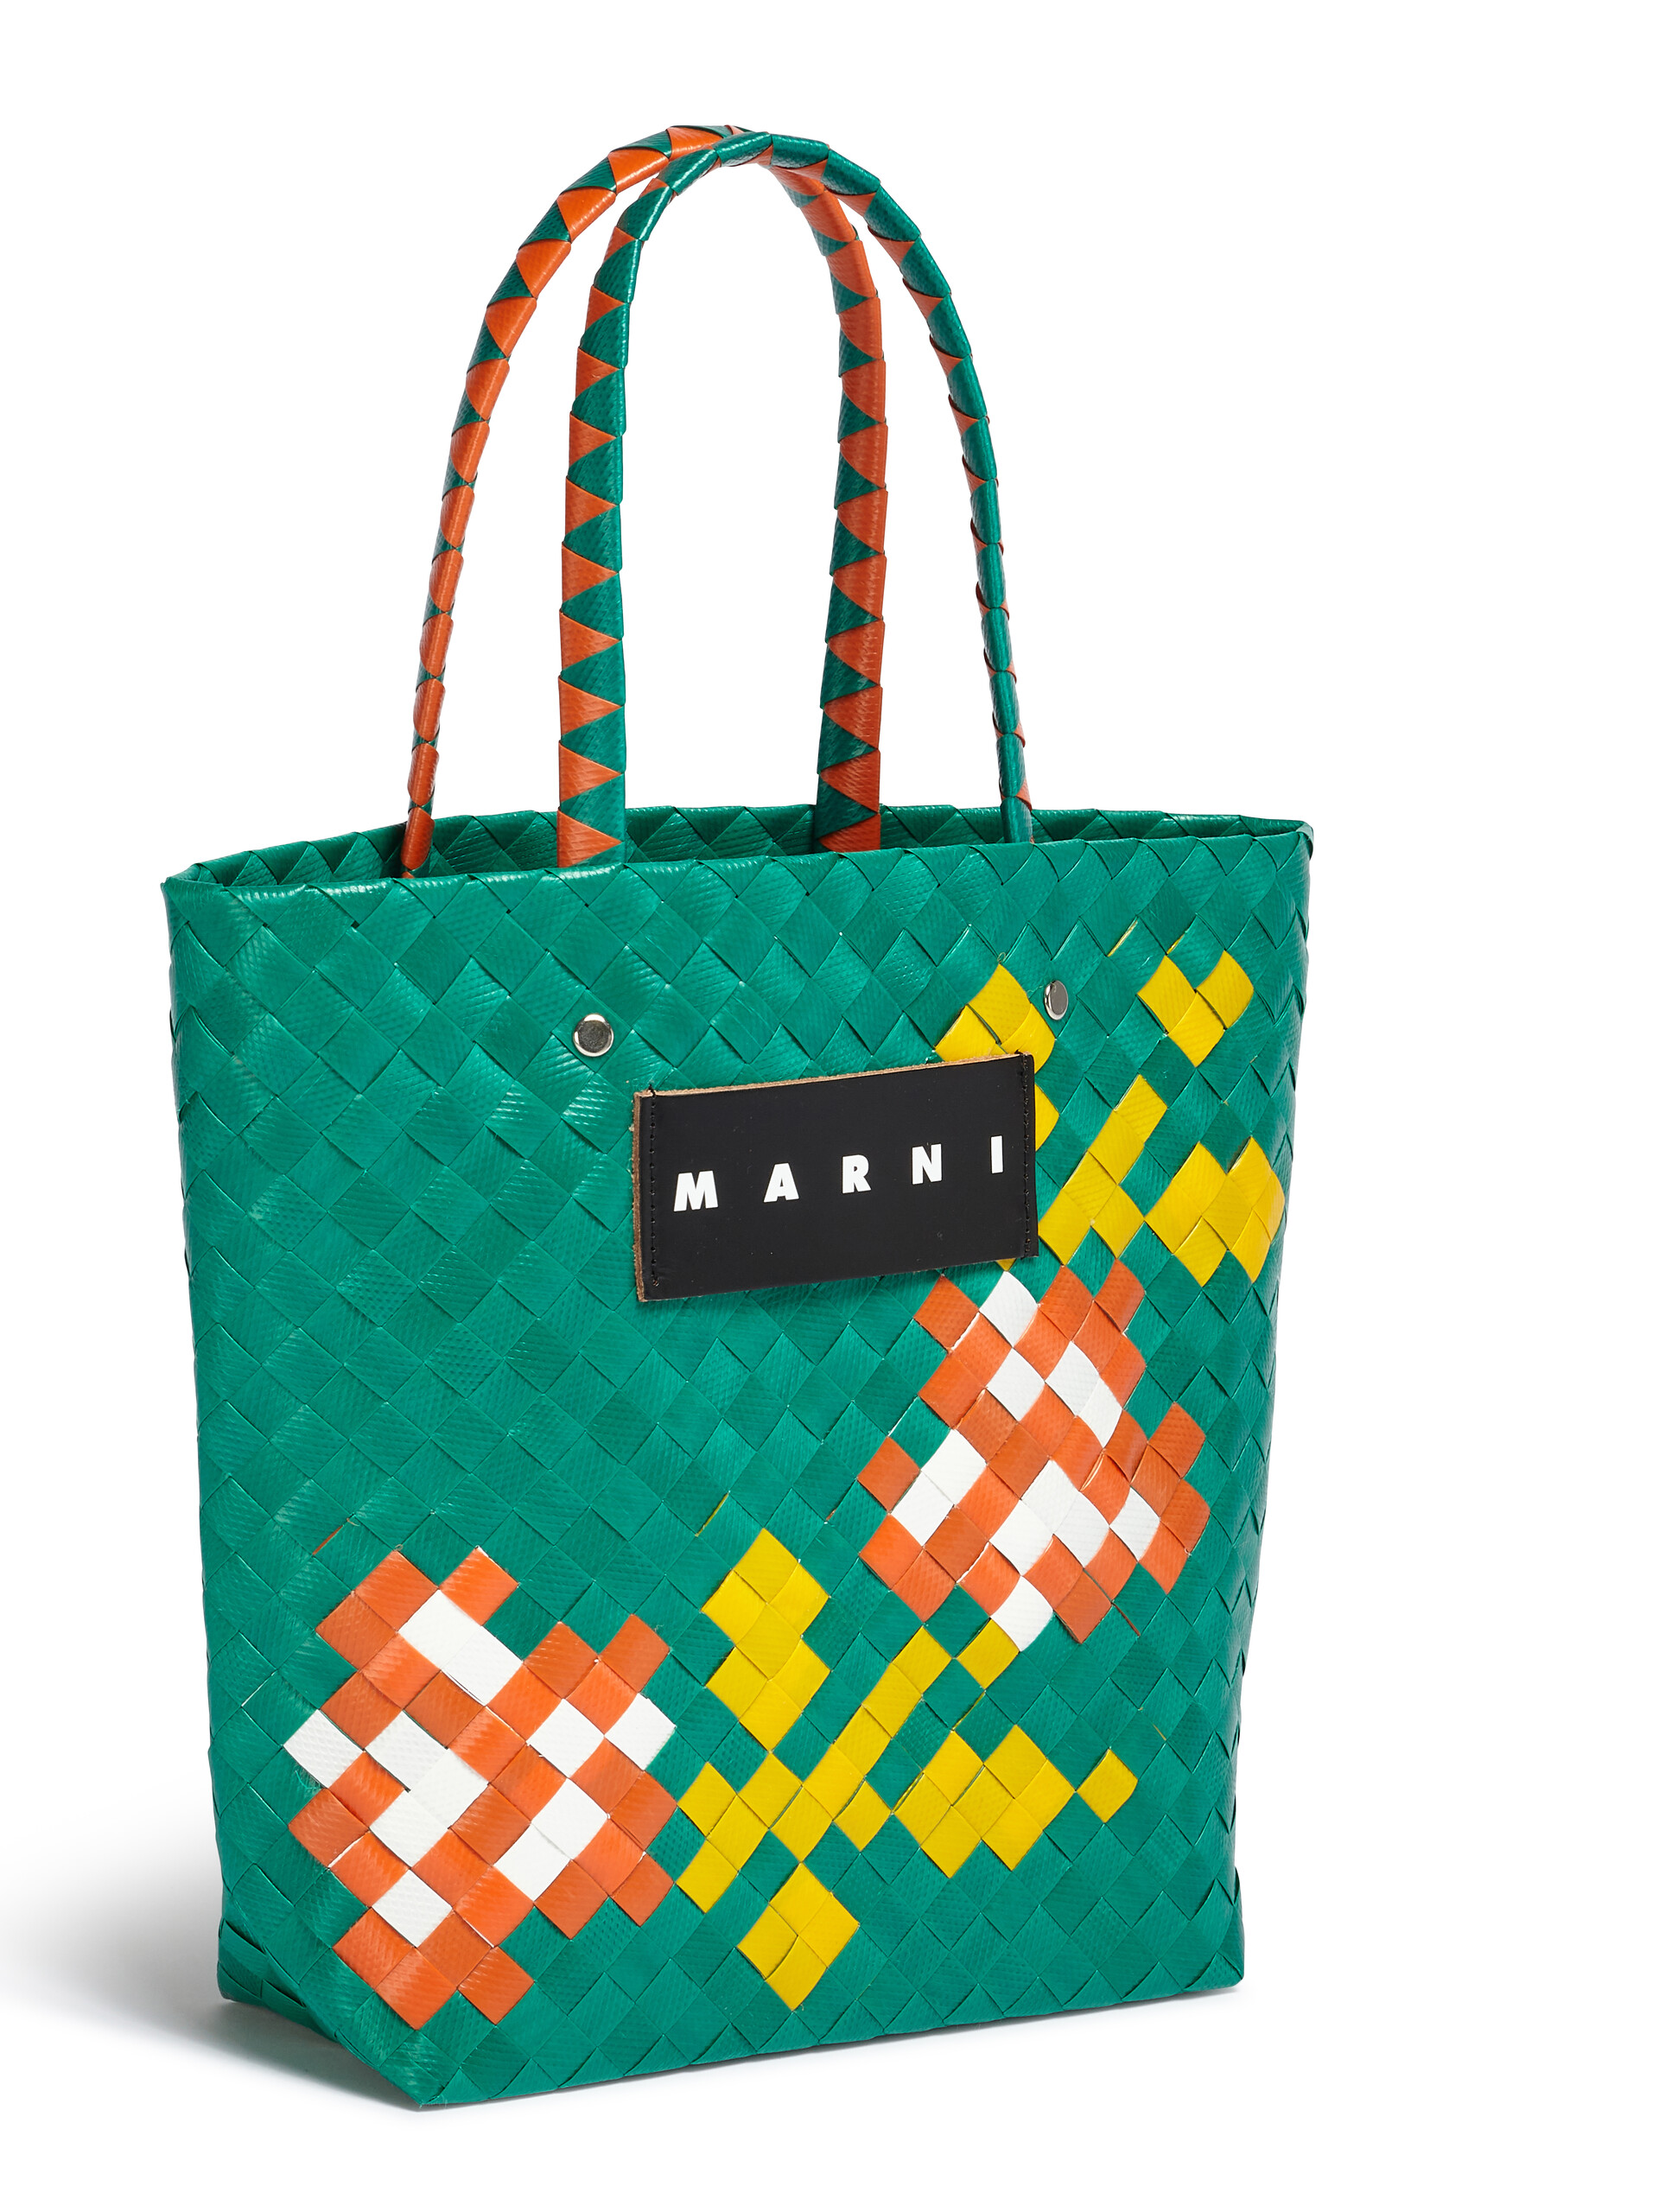 MARNI MARKET small bag in green flower motif - Bags - Image 4